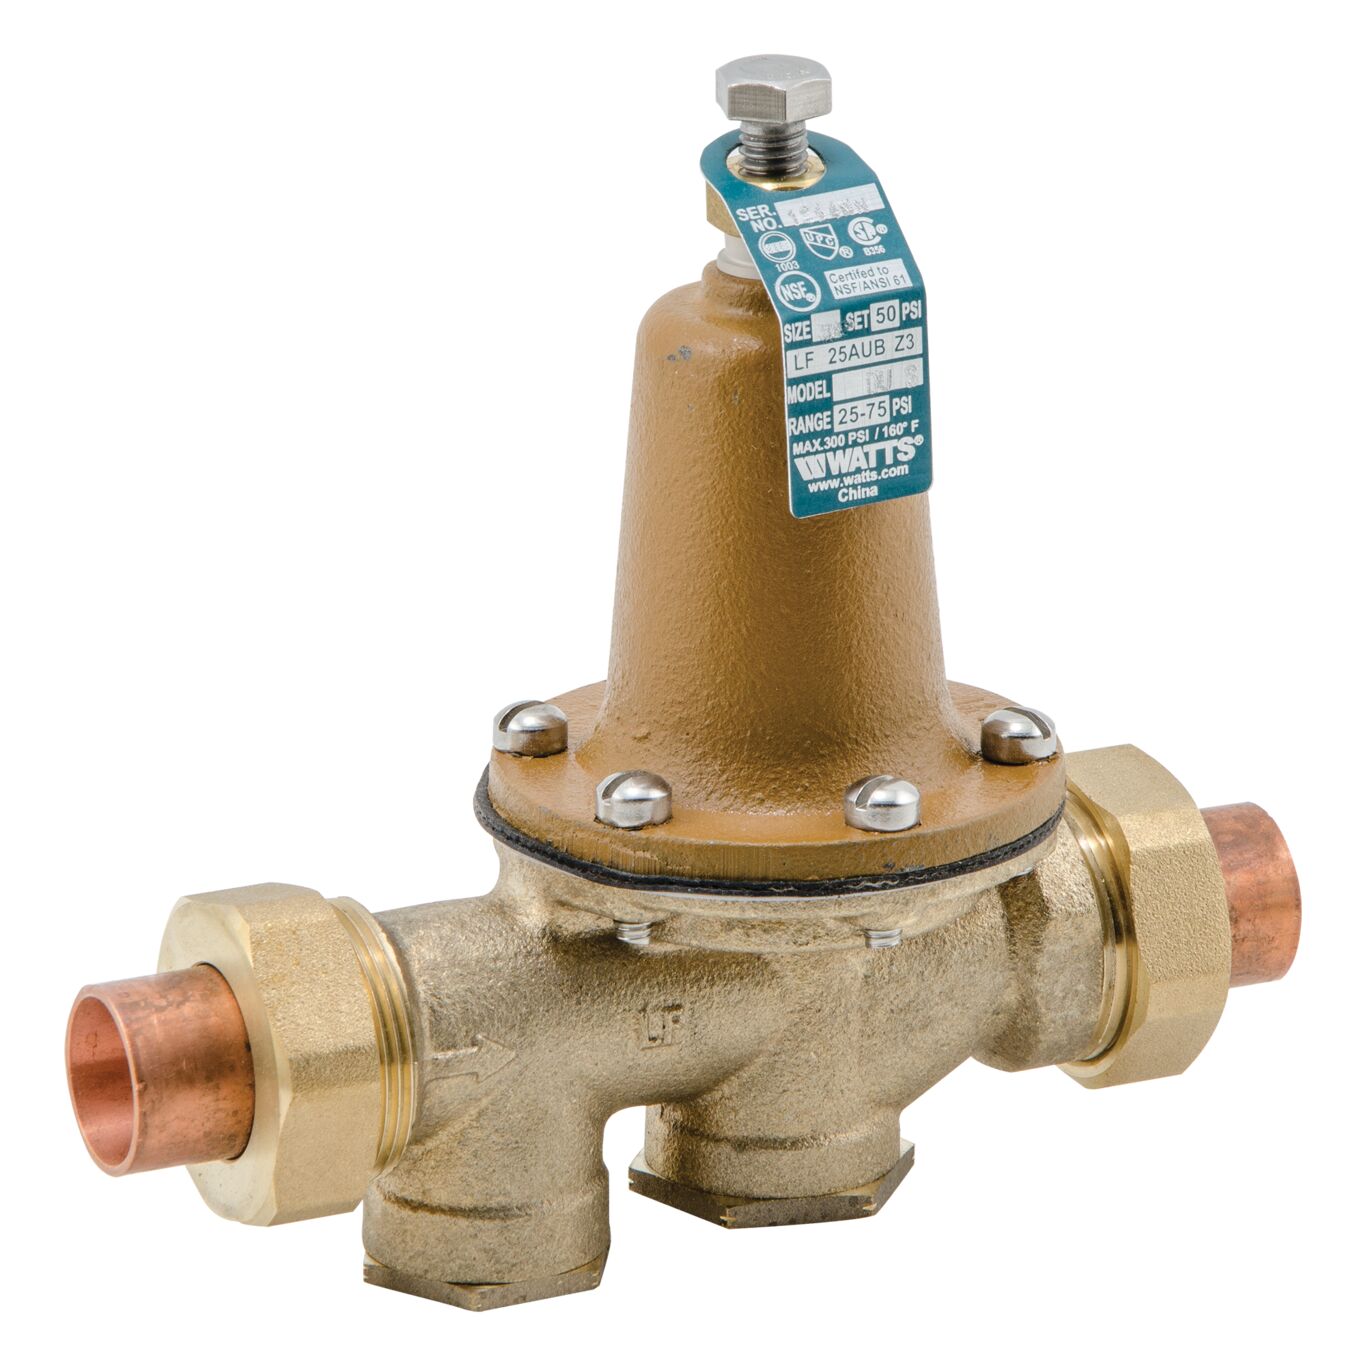 Watts 3/4 LF 25 AUB-Z3 Water Pressure Reducing Valve for sale online